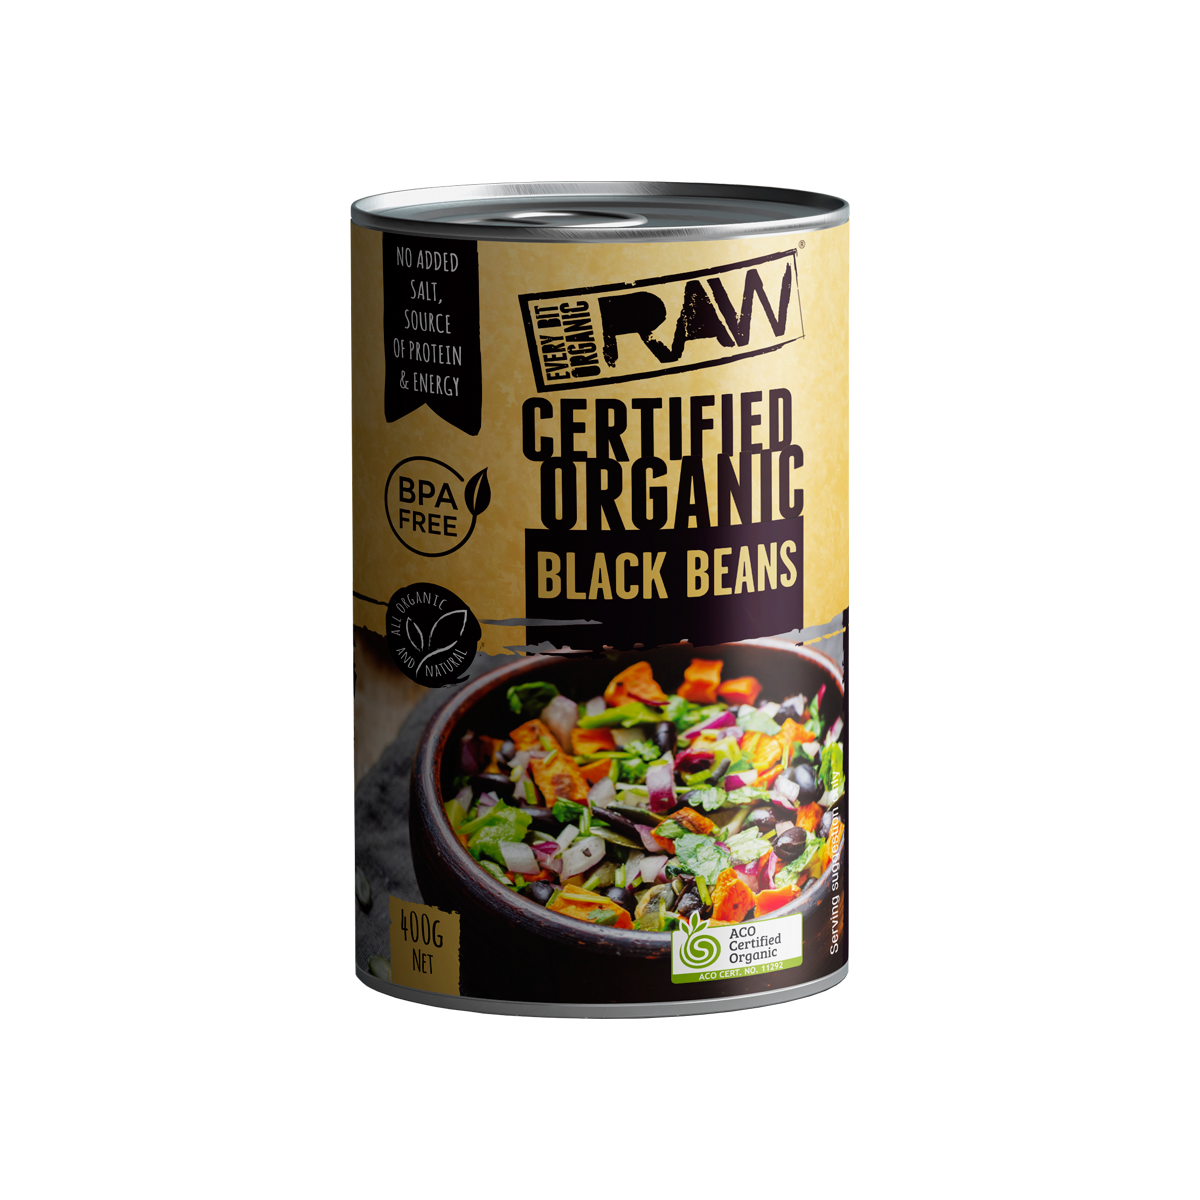 Every Bit Organic Black Beans 400g